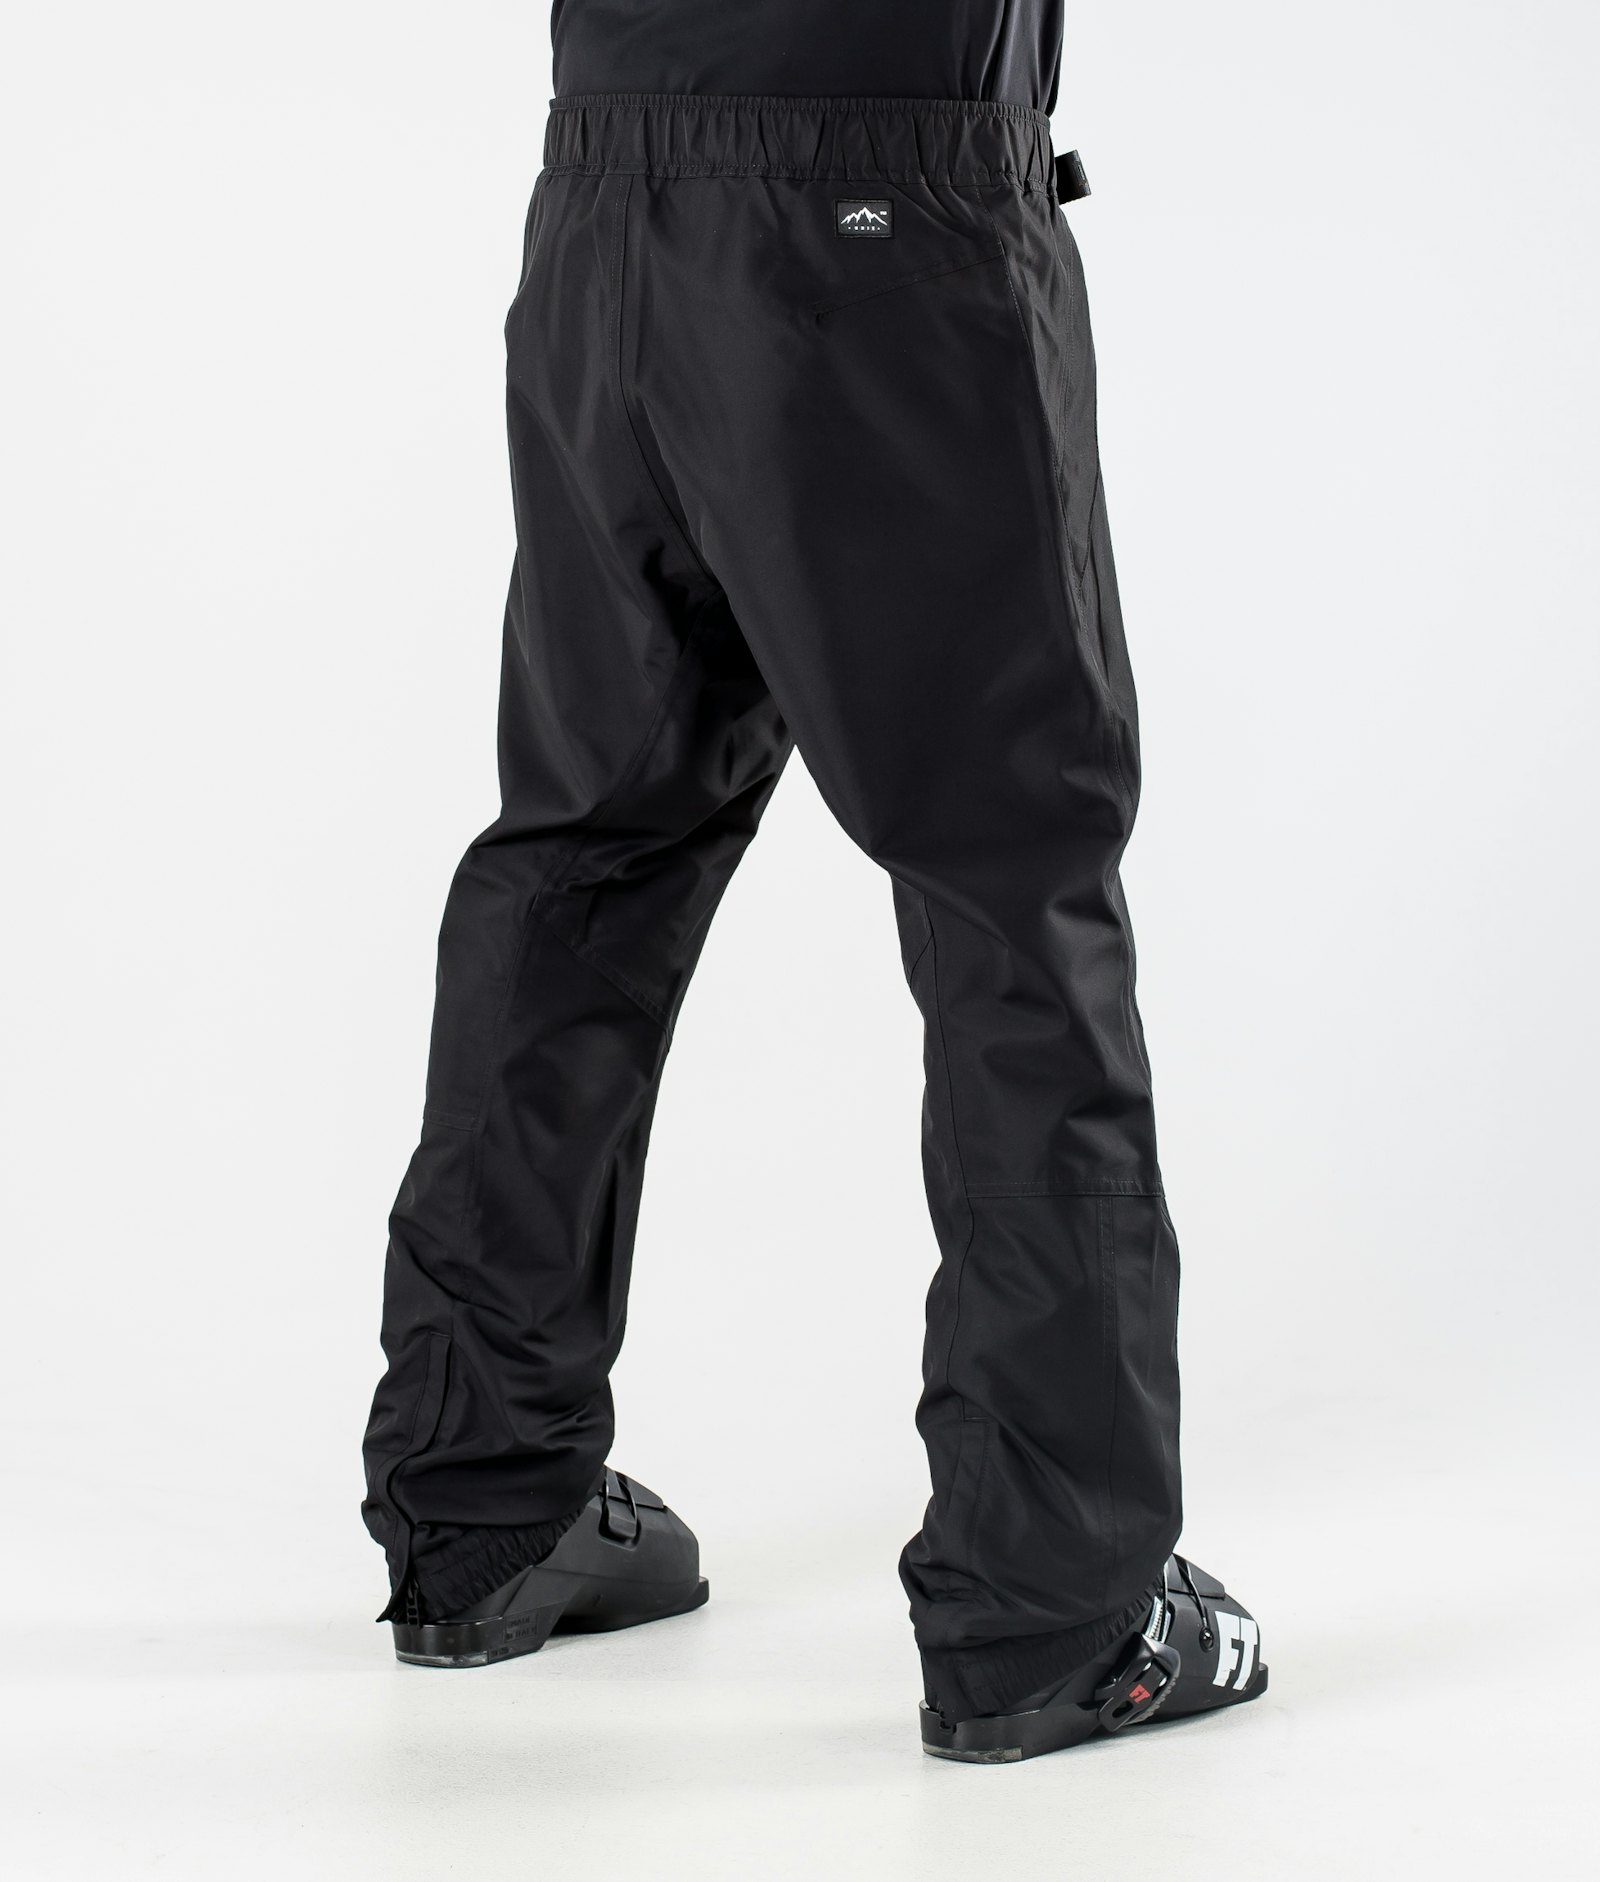 Blizzard 2020 Pantalon de Ski Homme Black